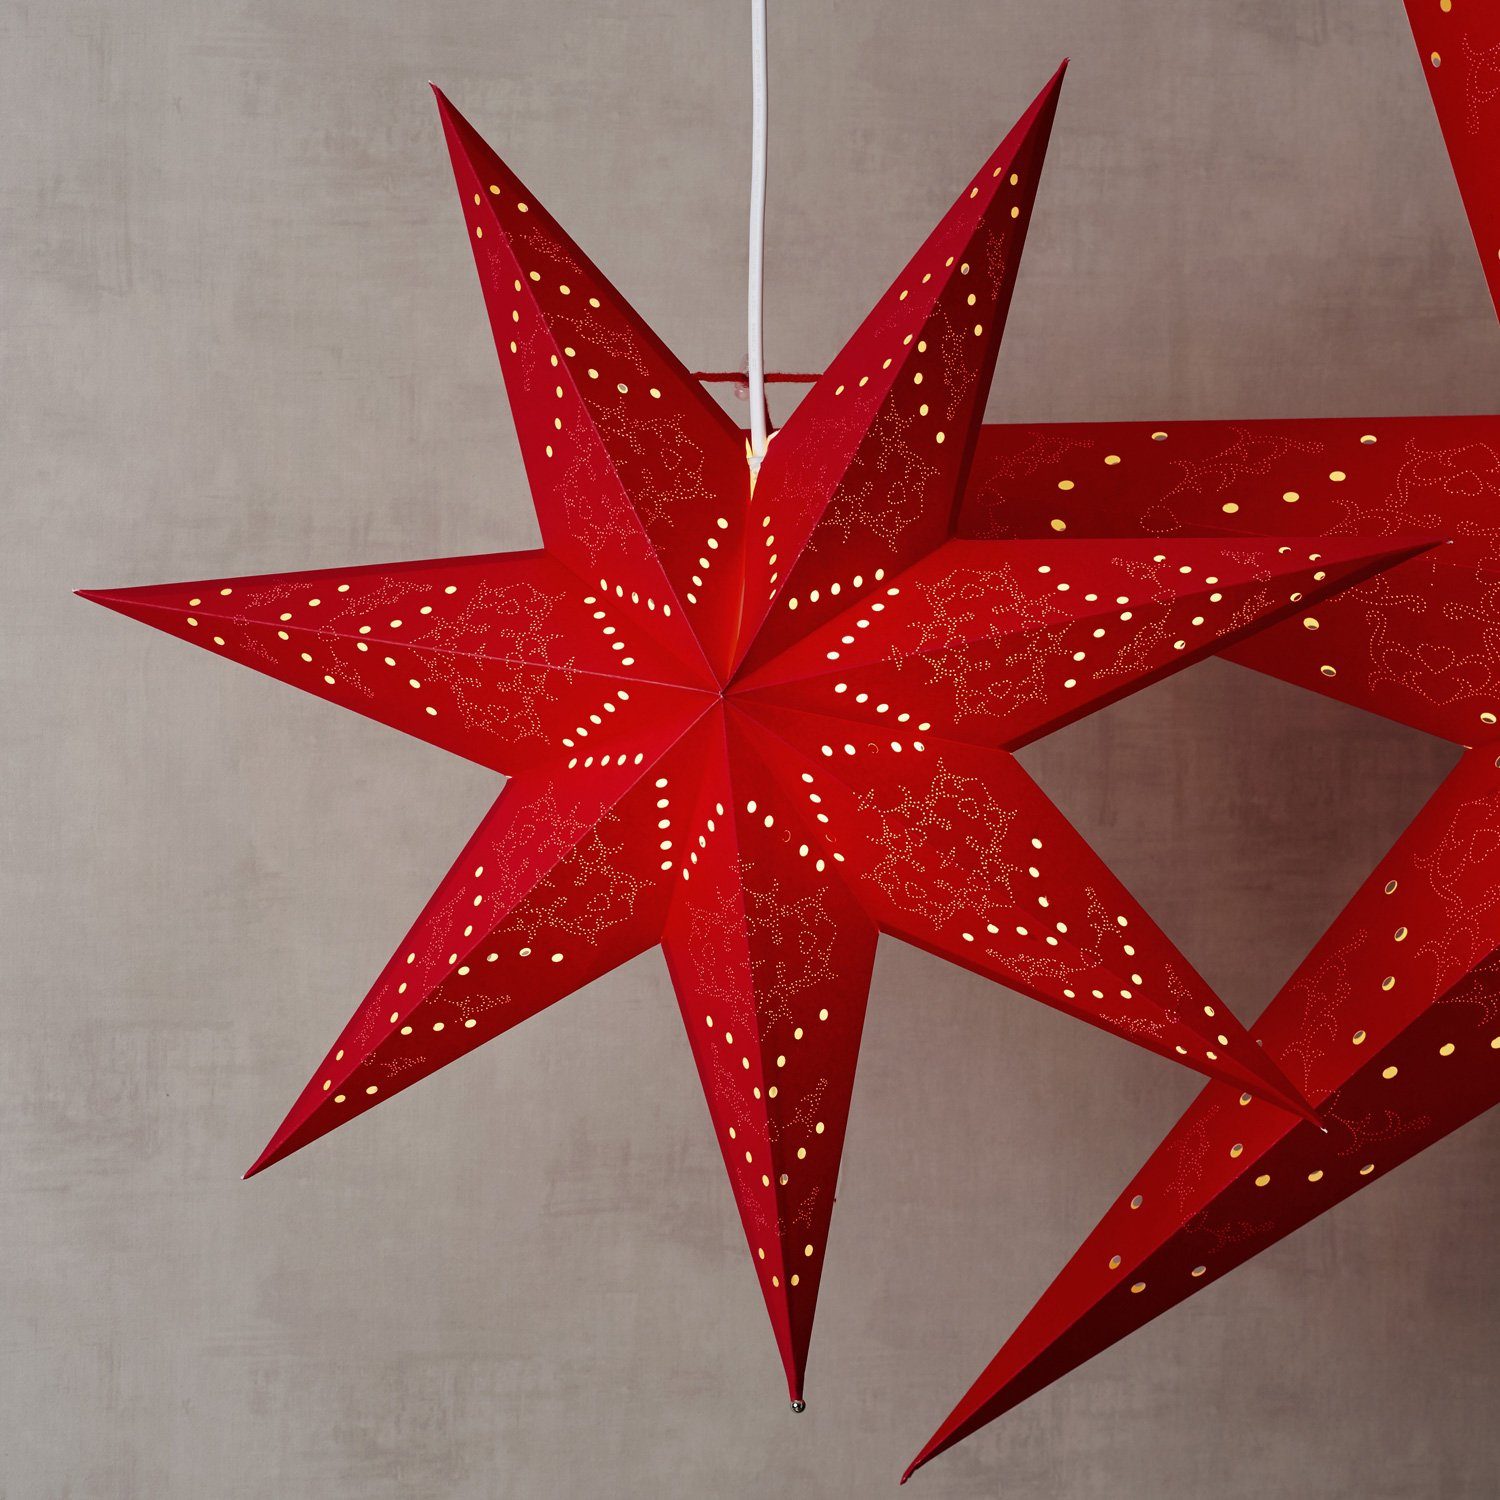 Papierstern Faltstern 7-zackig LED TRADING hängend mit Leuchtstern Kabel rot 51cm STAR Stern